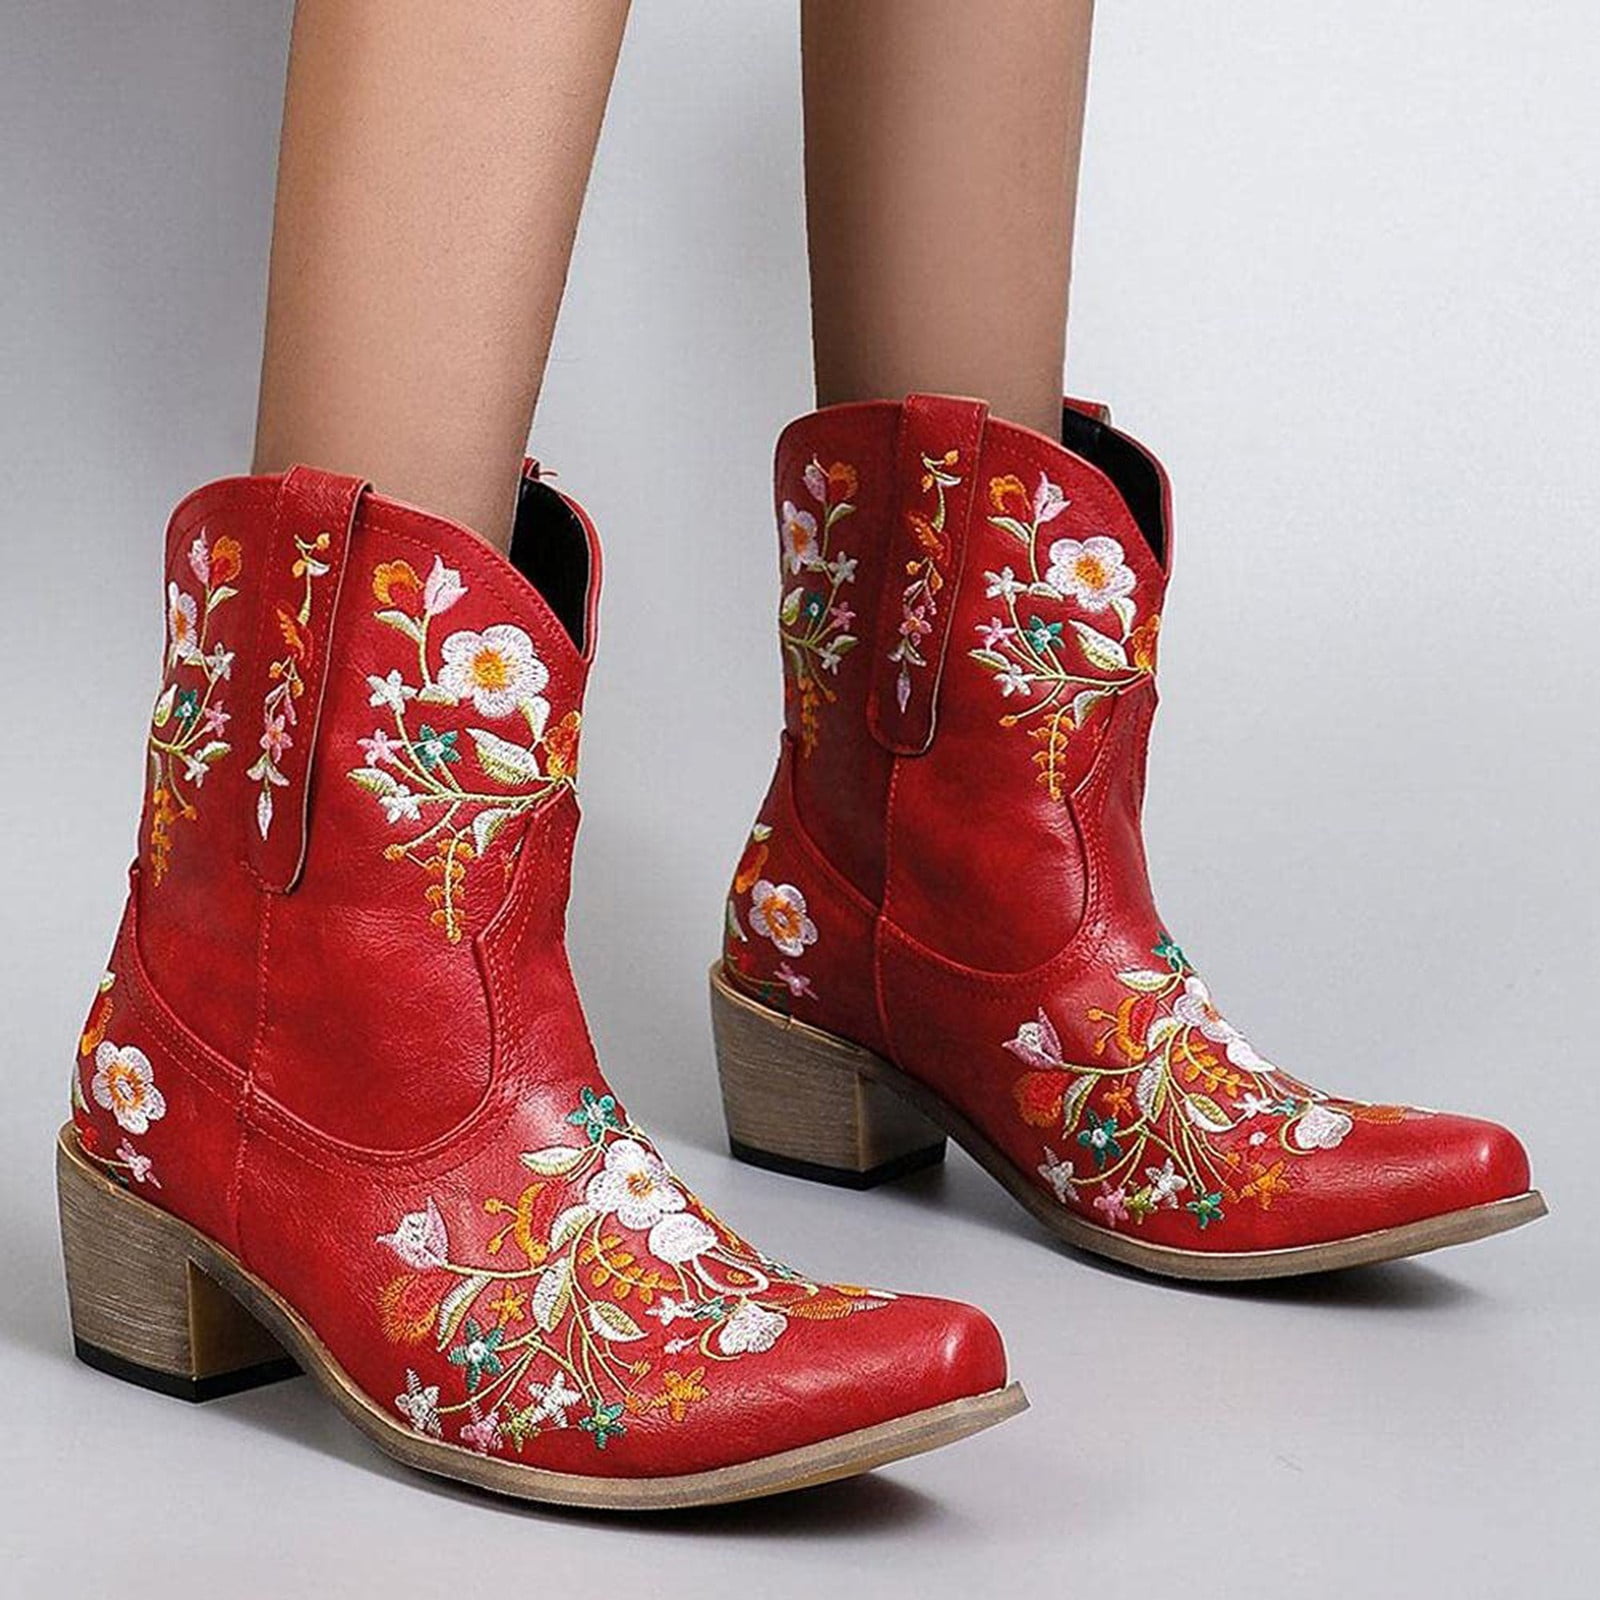 Knee-high leather boots - Dark brown - Ladies | H&M IN